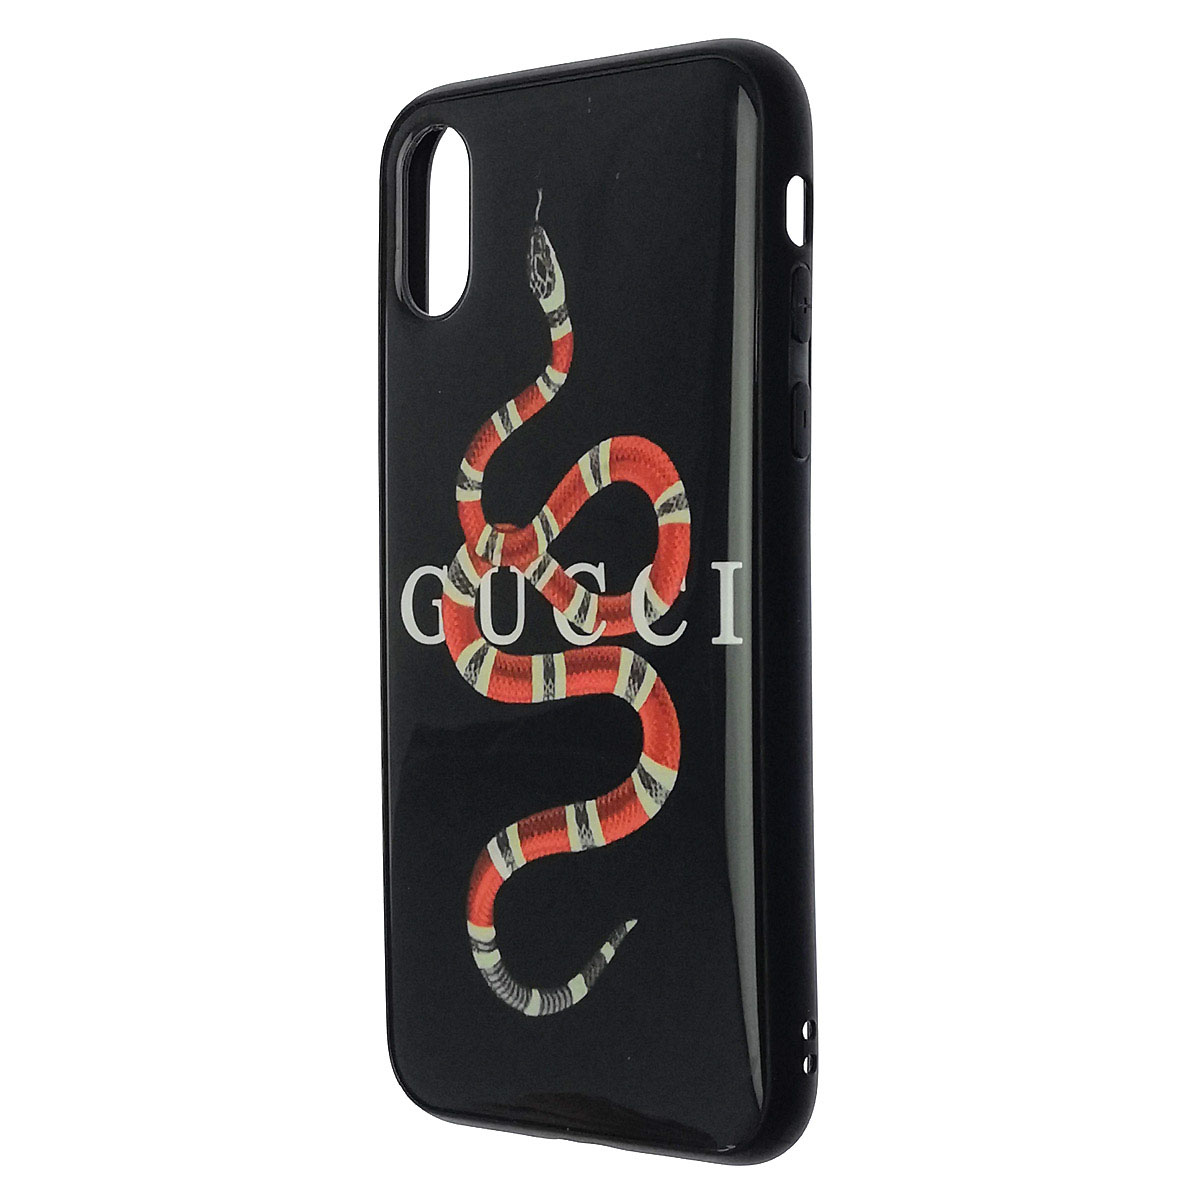 Чехол накладка для APPLE iPhone X, iPhone XS, силикон, глянцевый, рисунок Змея Gucci